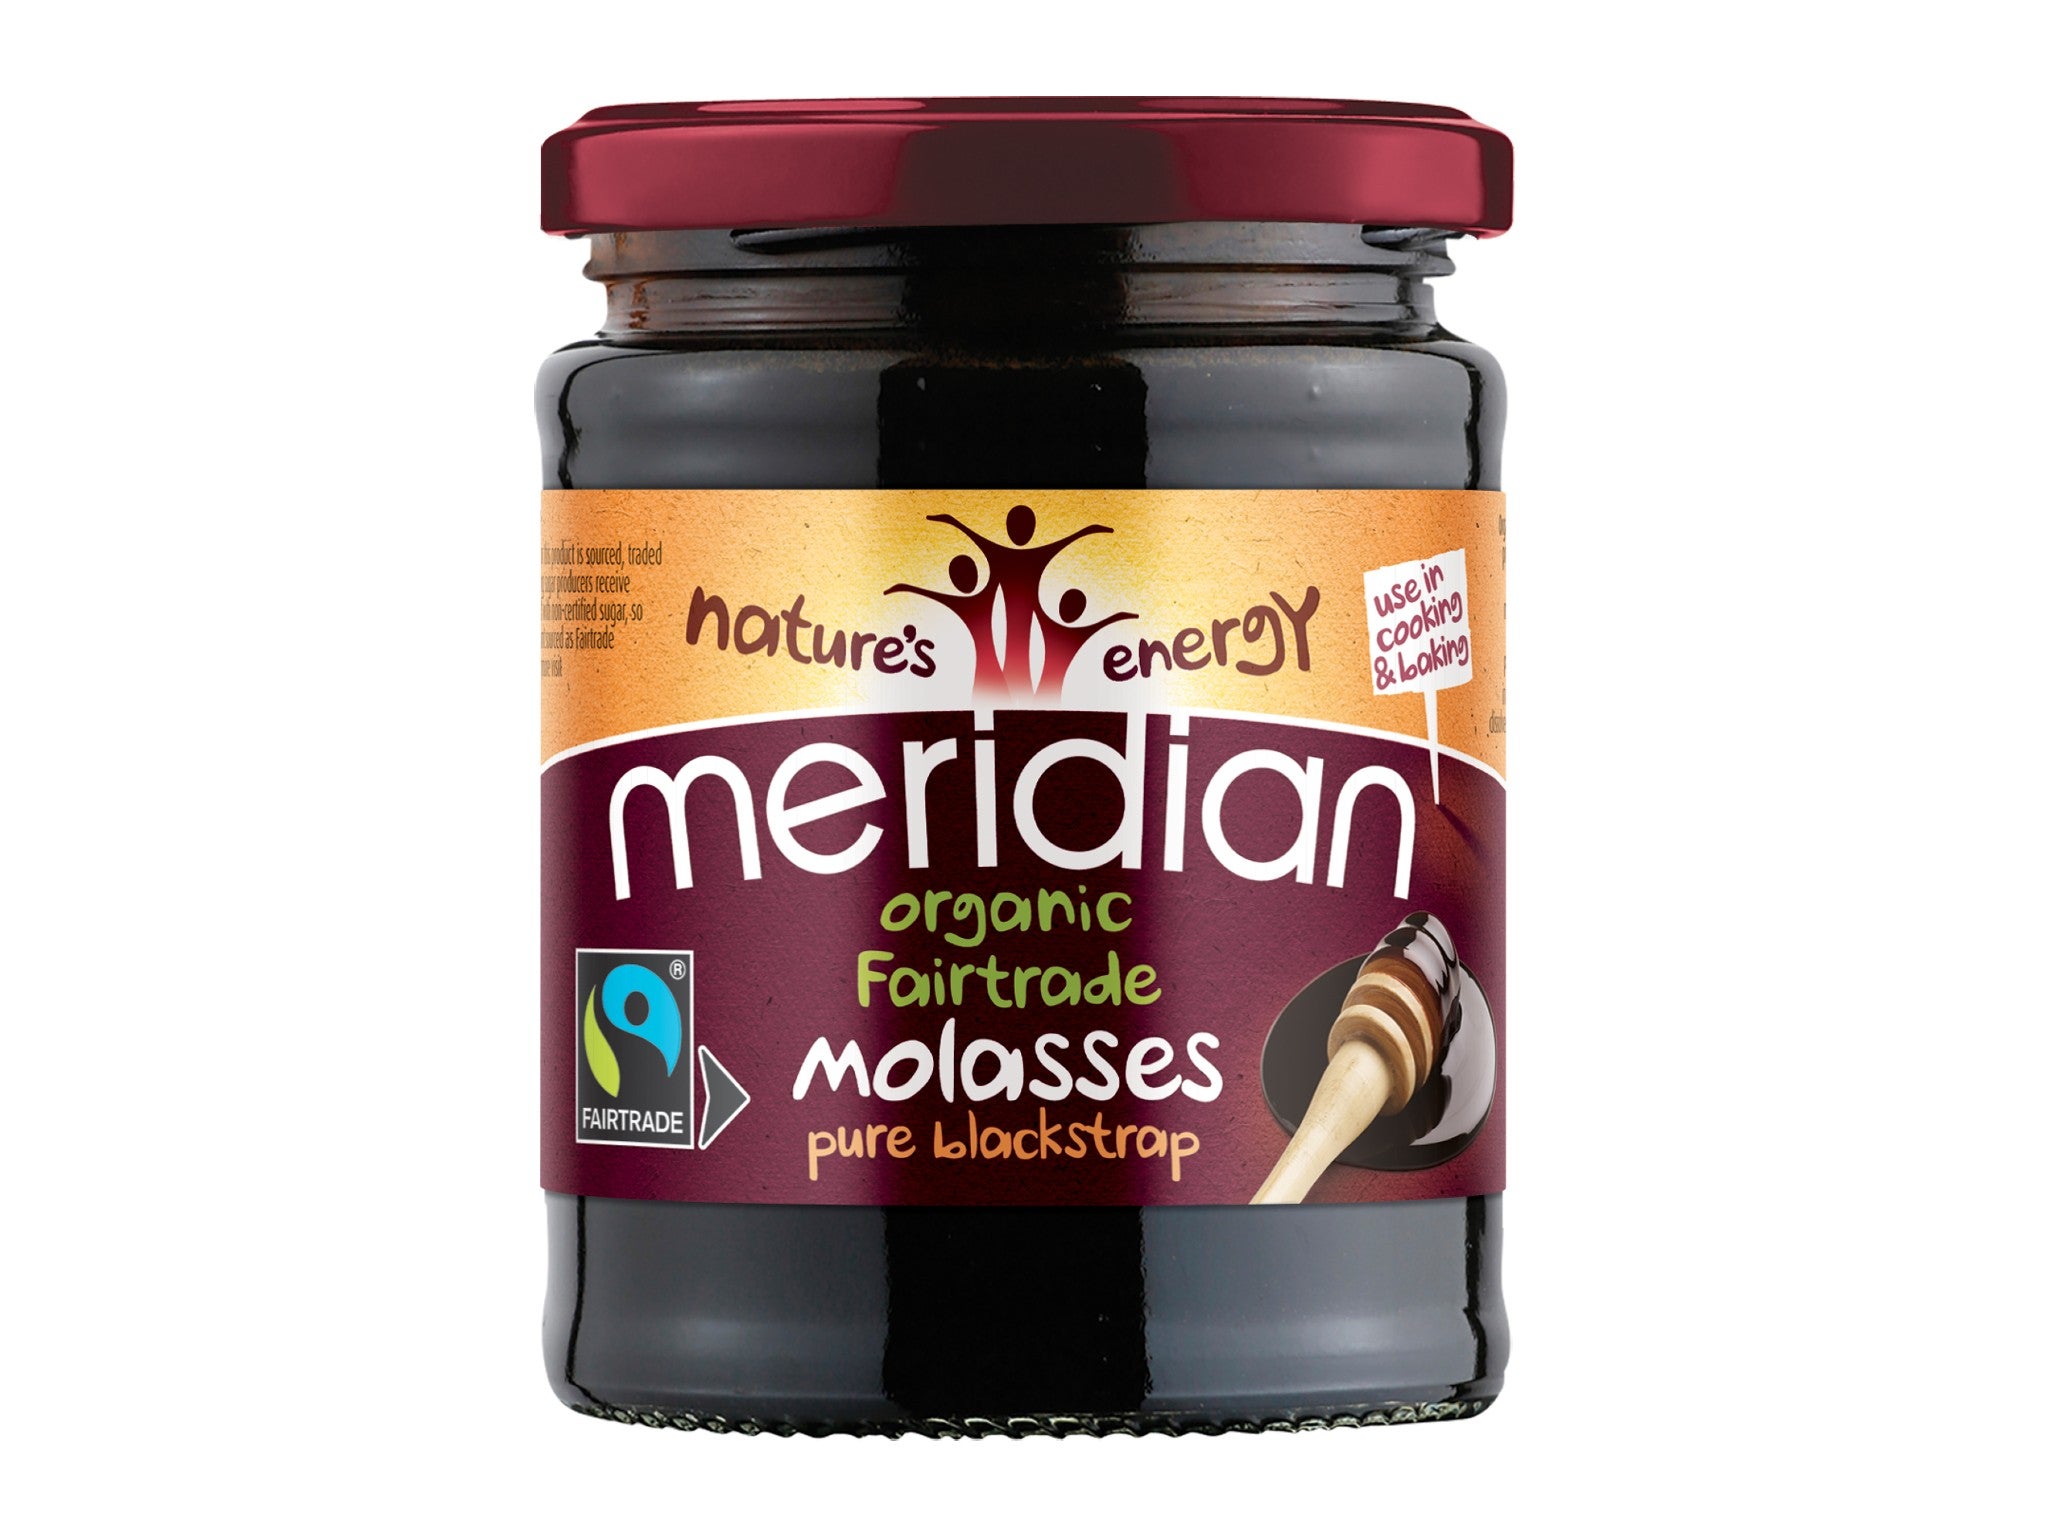 Meridian organic black strap molasses indybest.jpg